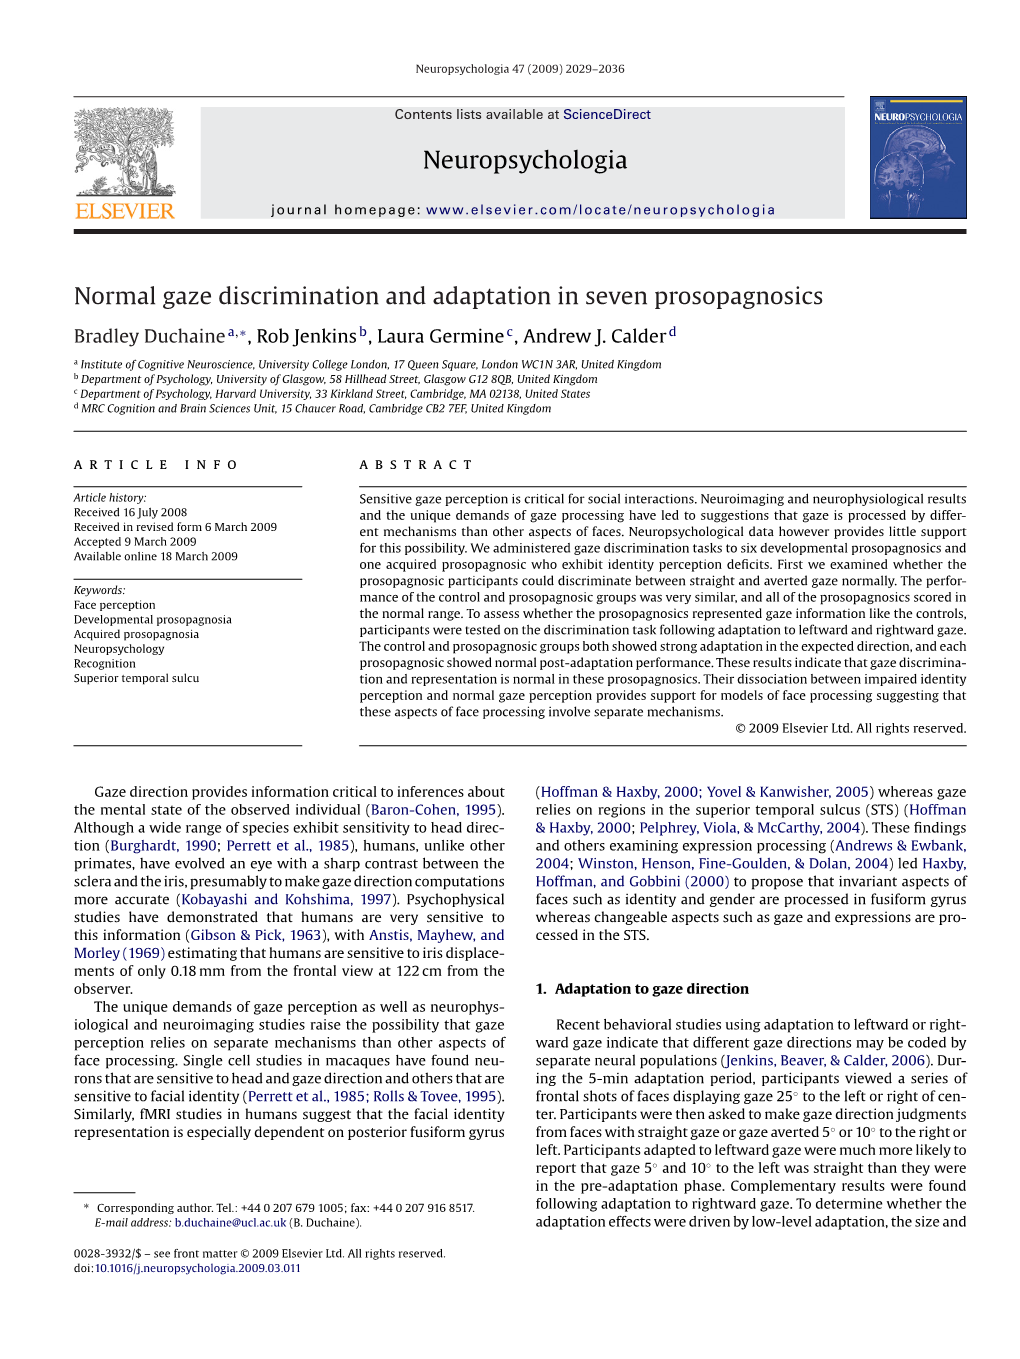 Neuropsychologia Normal Gaze Discrimination and Adaptation In